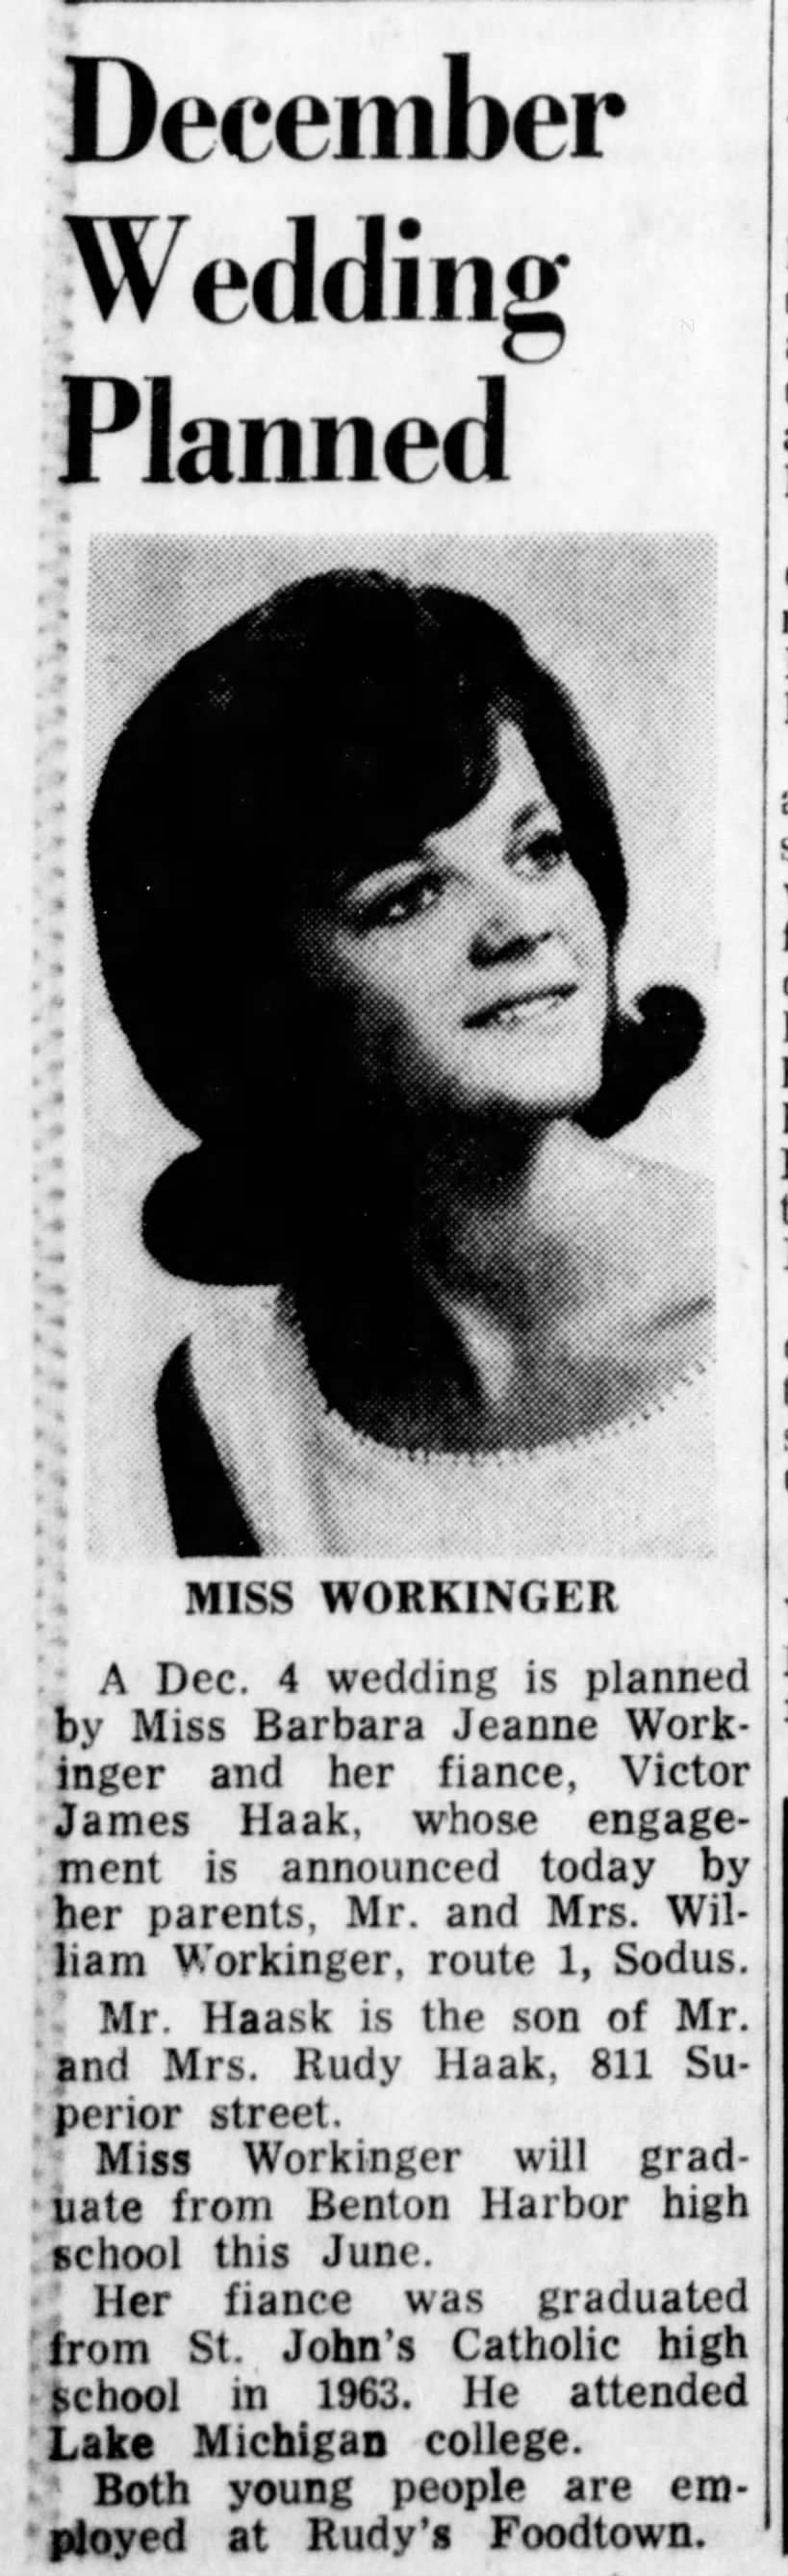 Workinger-Haak Engagement; The News-Palladium; Benton Harbor, MI; 05 Apr 1965, pg 30